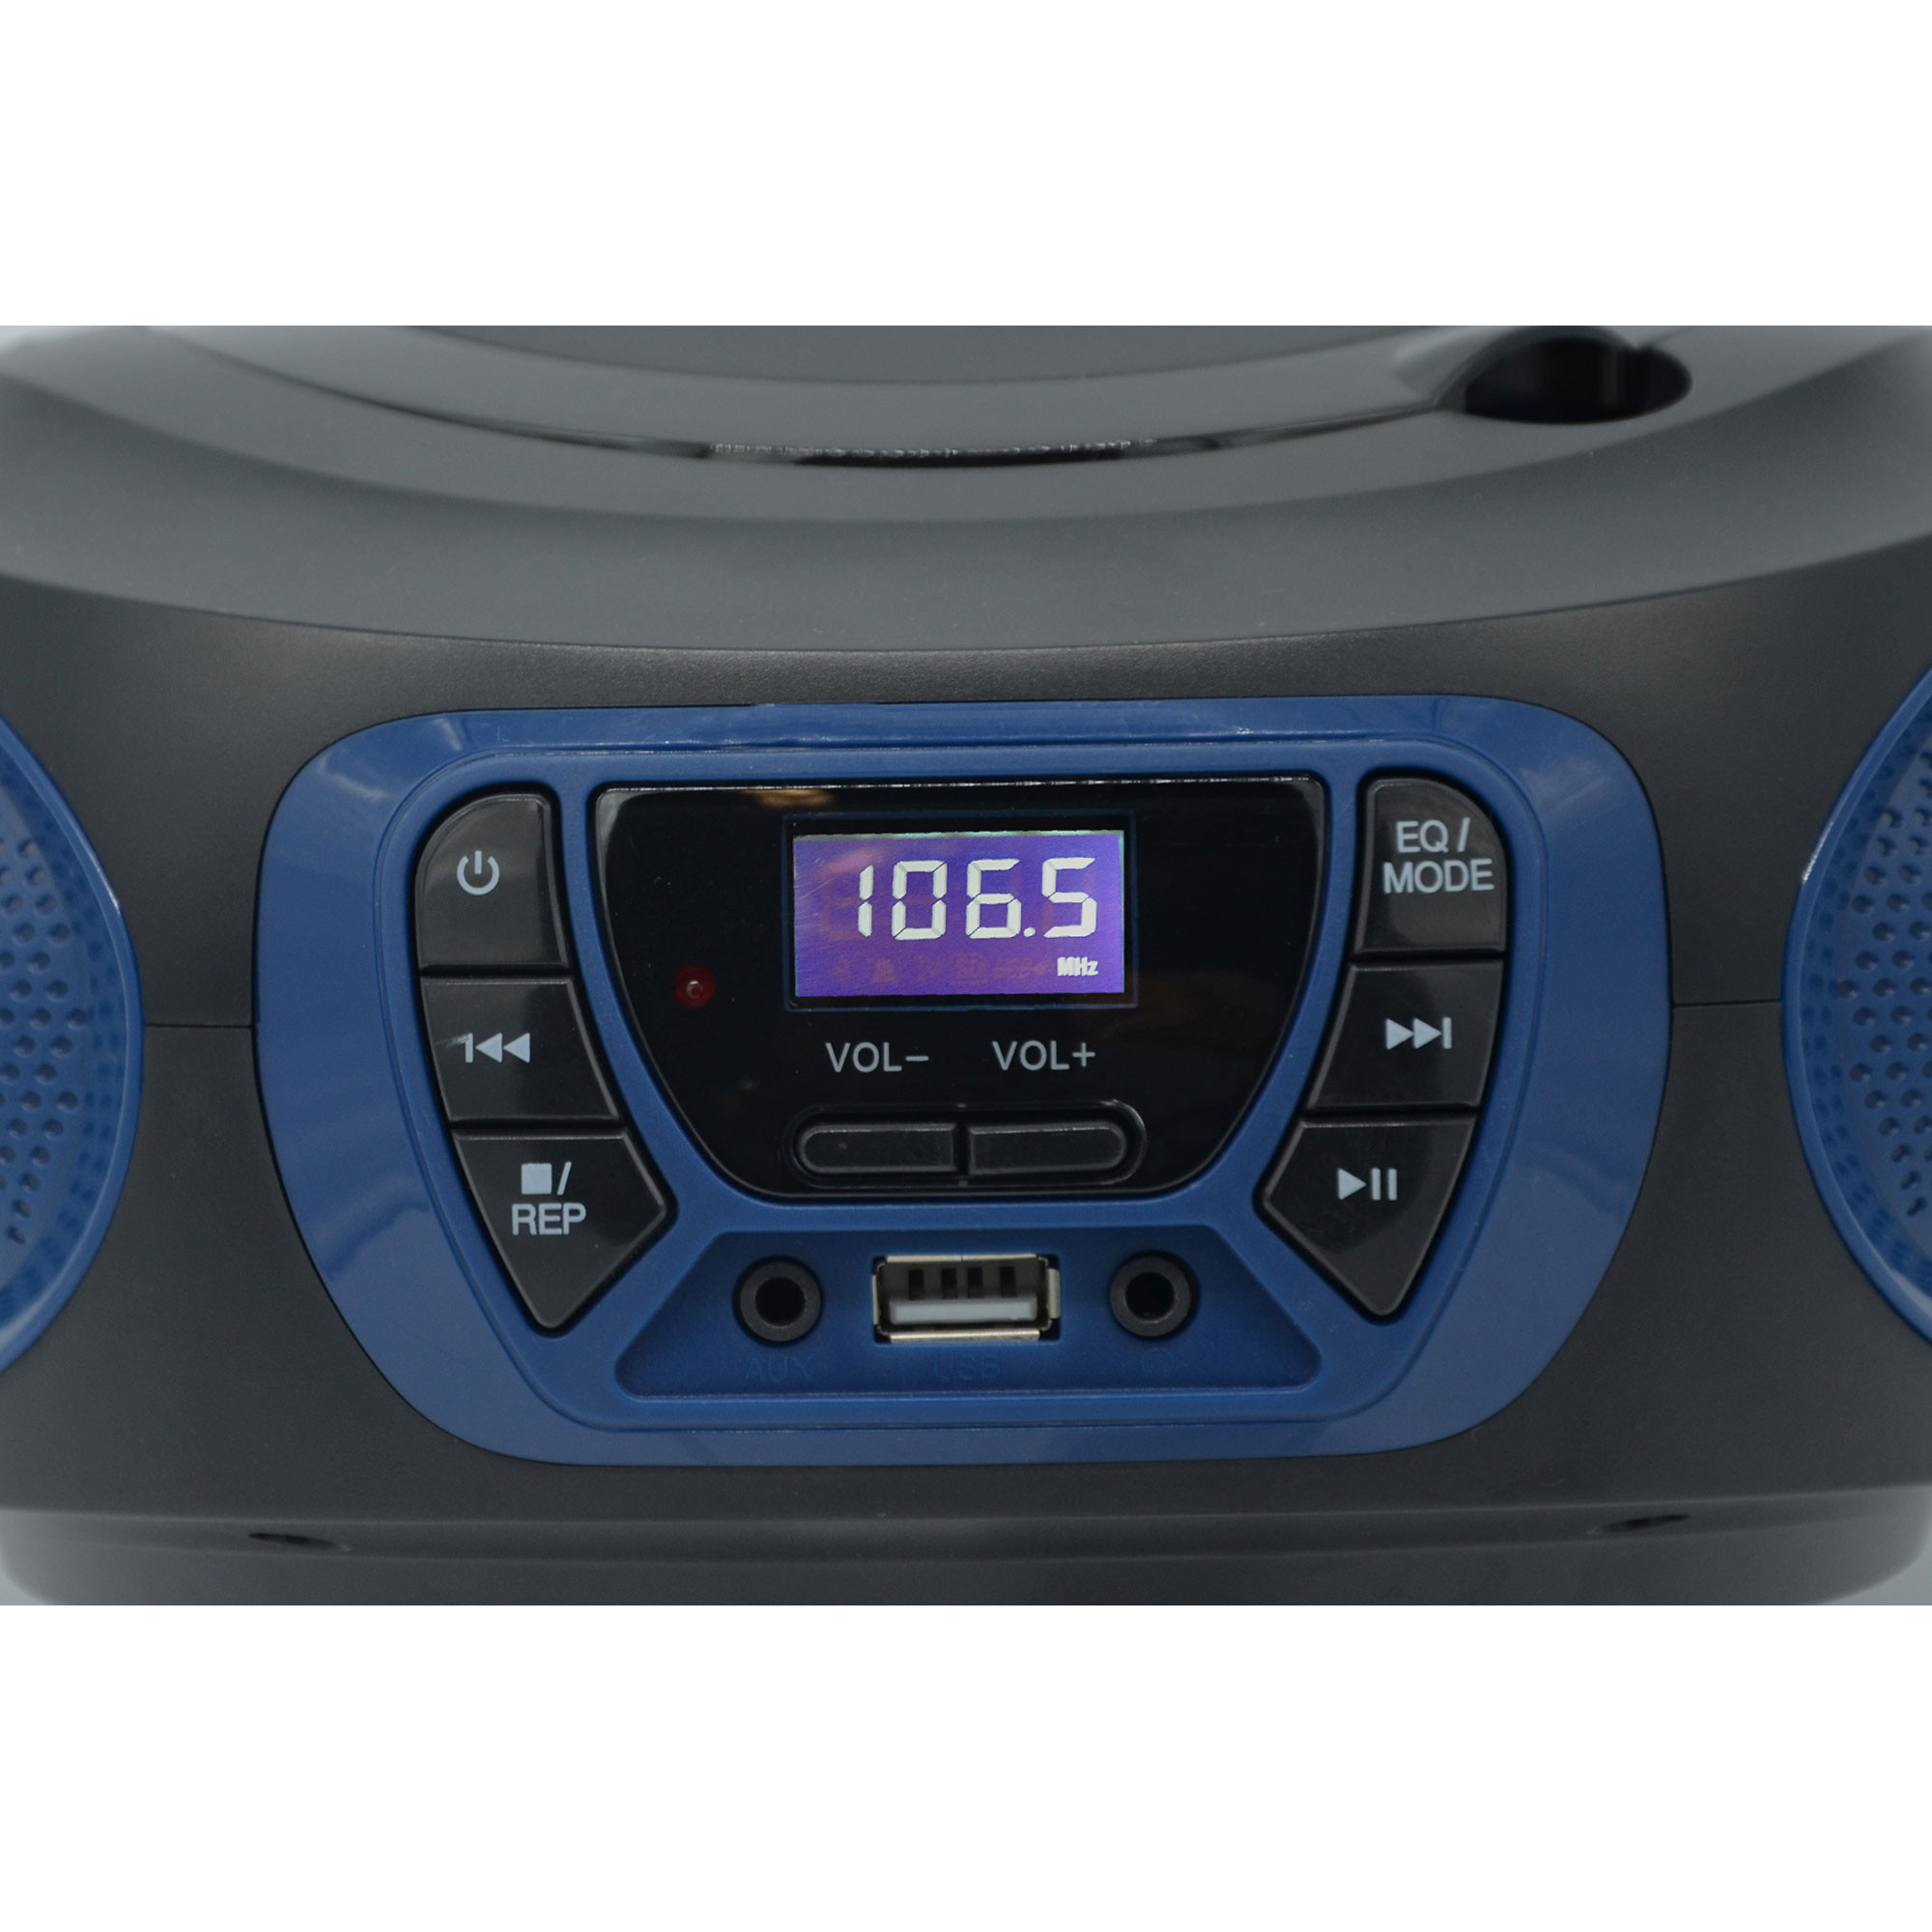 Roadstar CDR-365U/GR Radio CD Player Portátil Digital FM PLL, Boombox  Reproductor CD, CD-R, CD-RW, CD-MP3, Puerto USB, Stereo, AUX-IN, Salida de  Auriculares, Negro / Verde